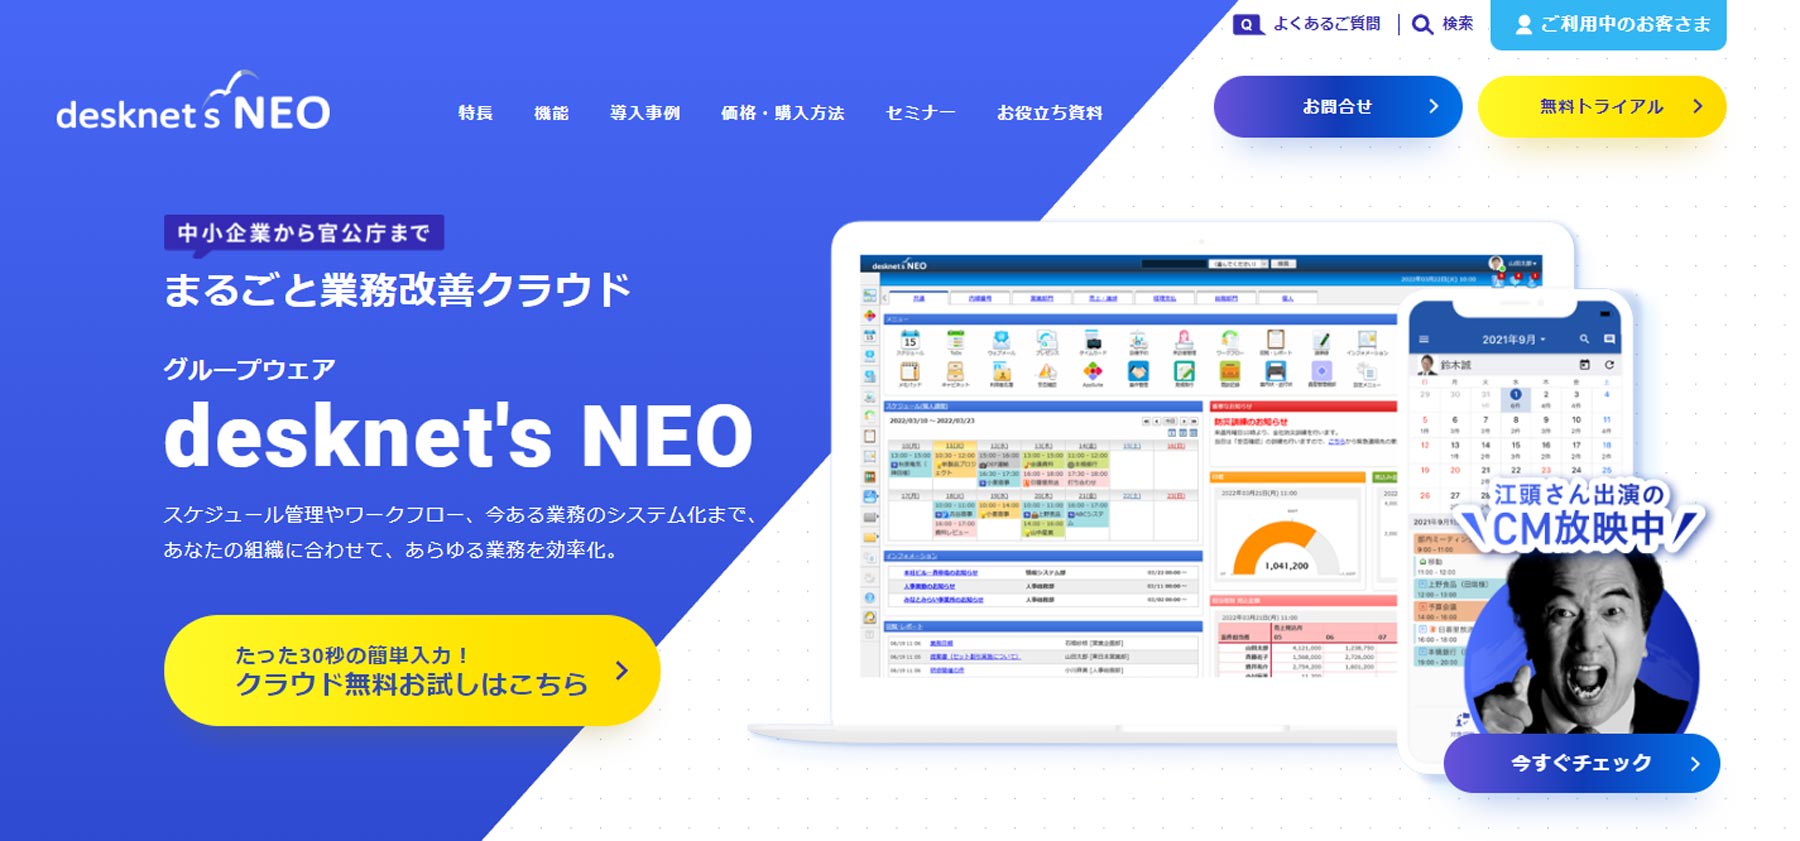 desknet’s NEO公式Webサイト